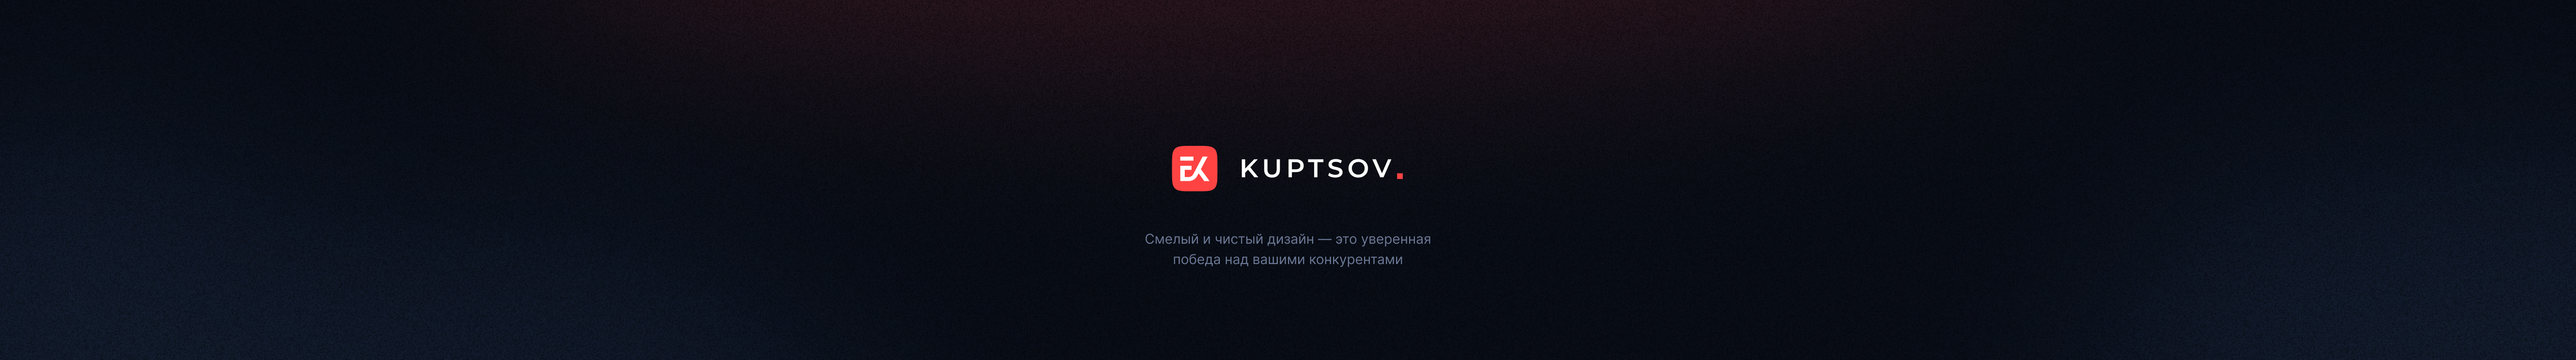 Profielbanner van Evgeny Kuptsov